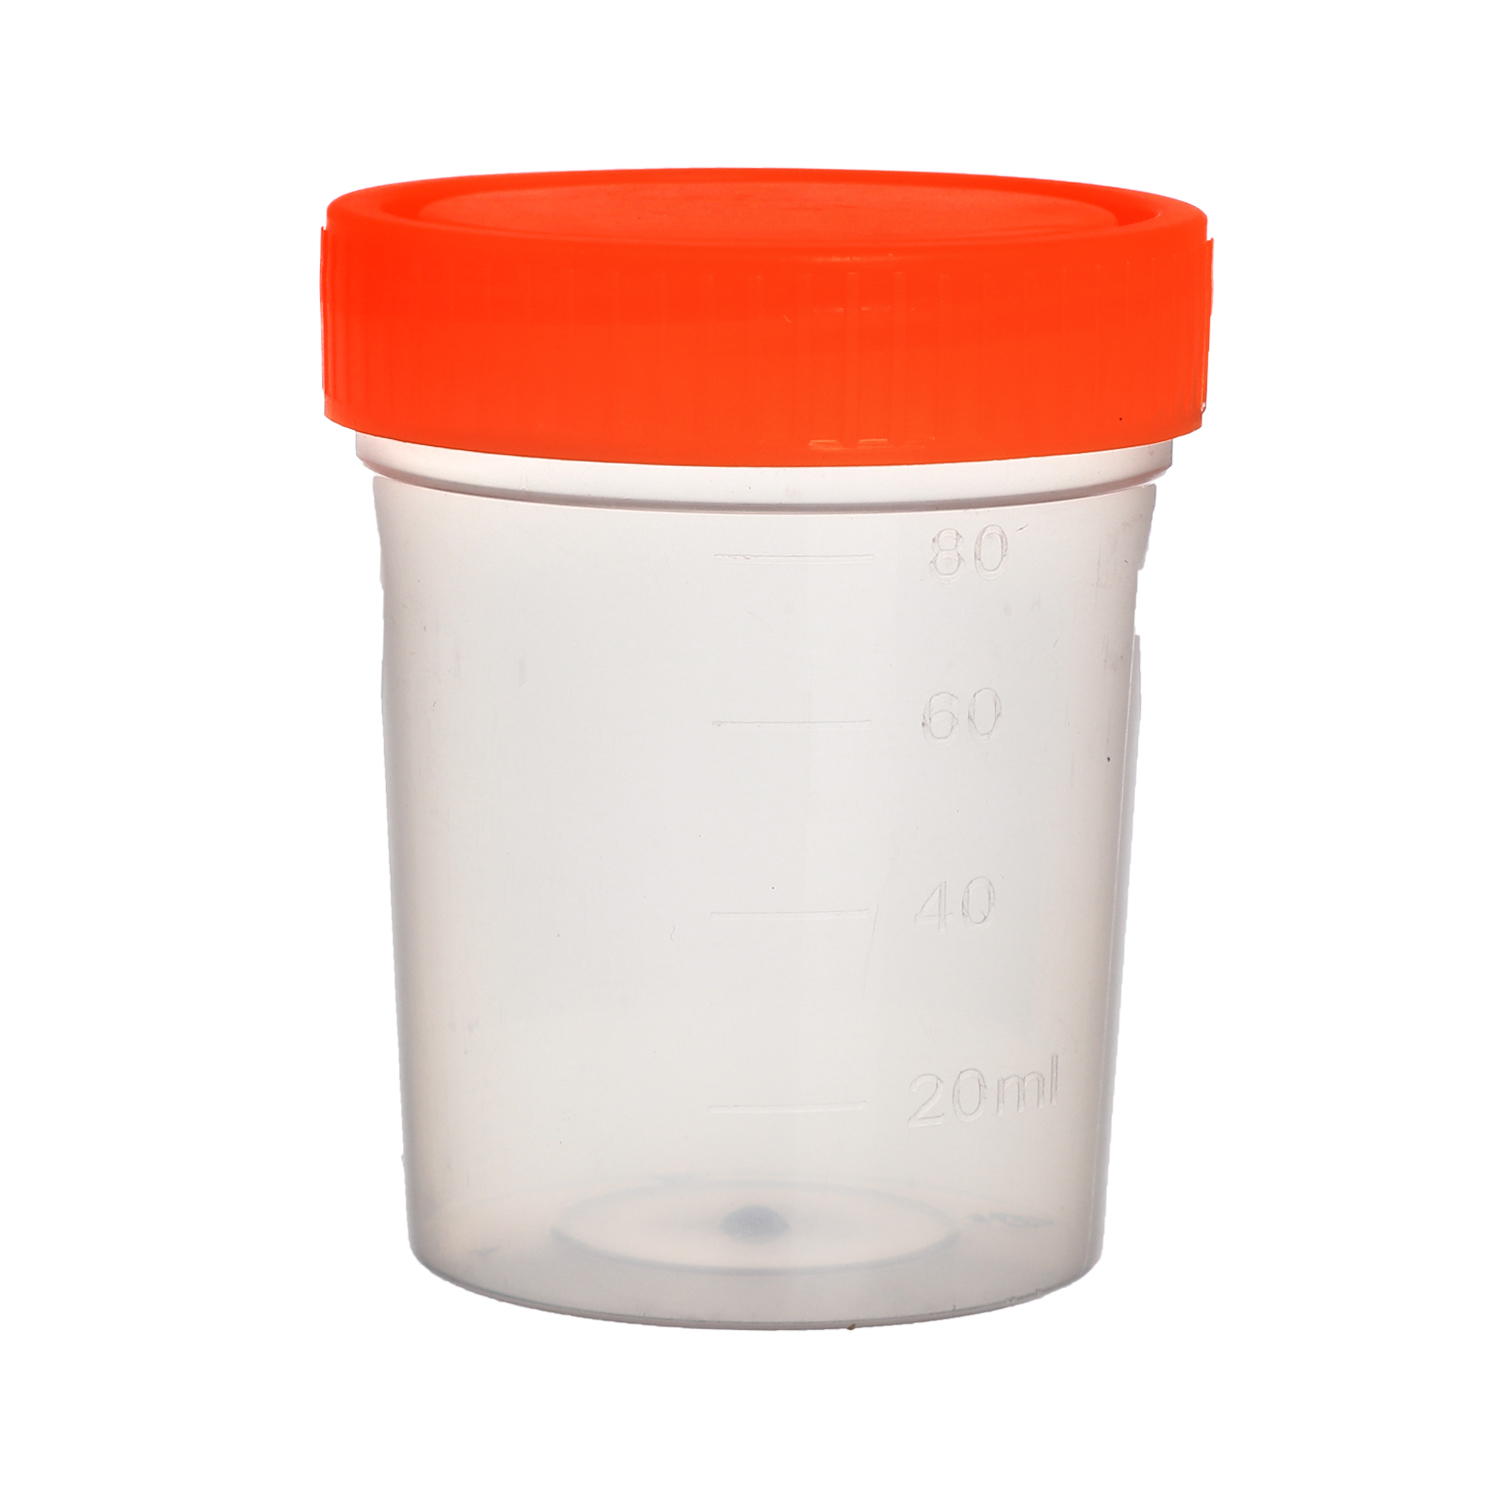 Sterile urine cups